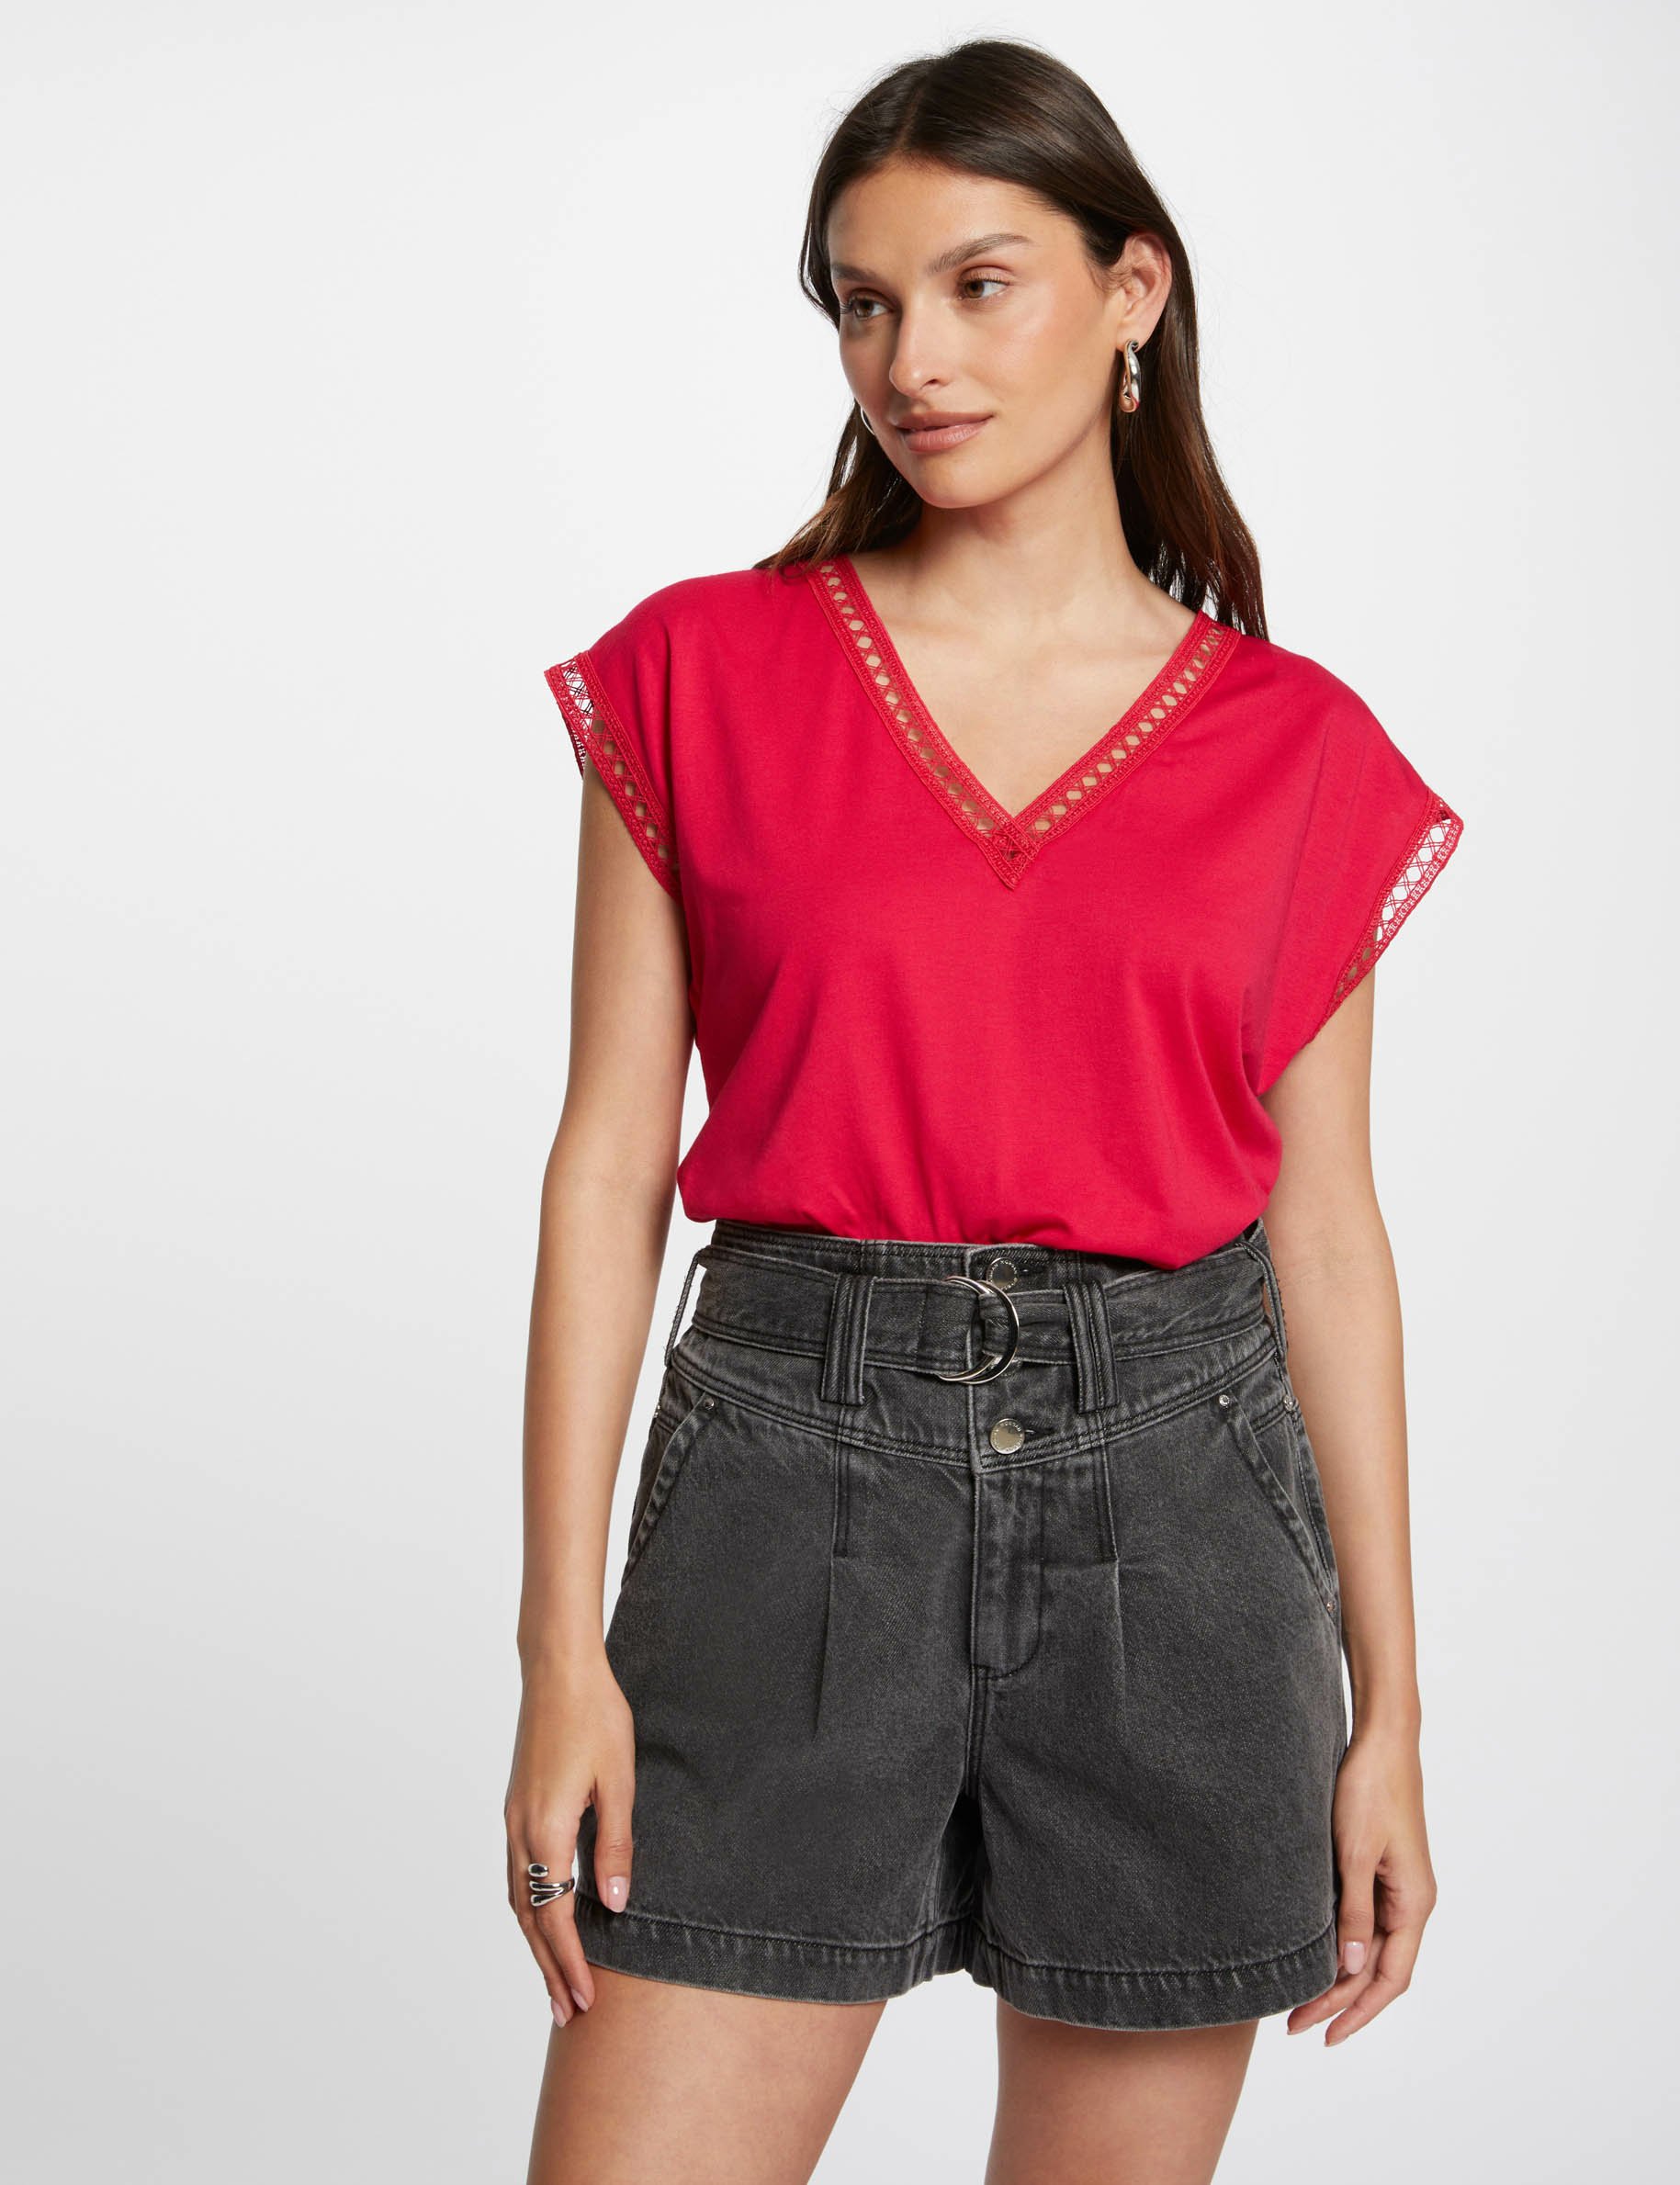 Short-sleeved t-shirt raspberry ladies'